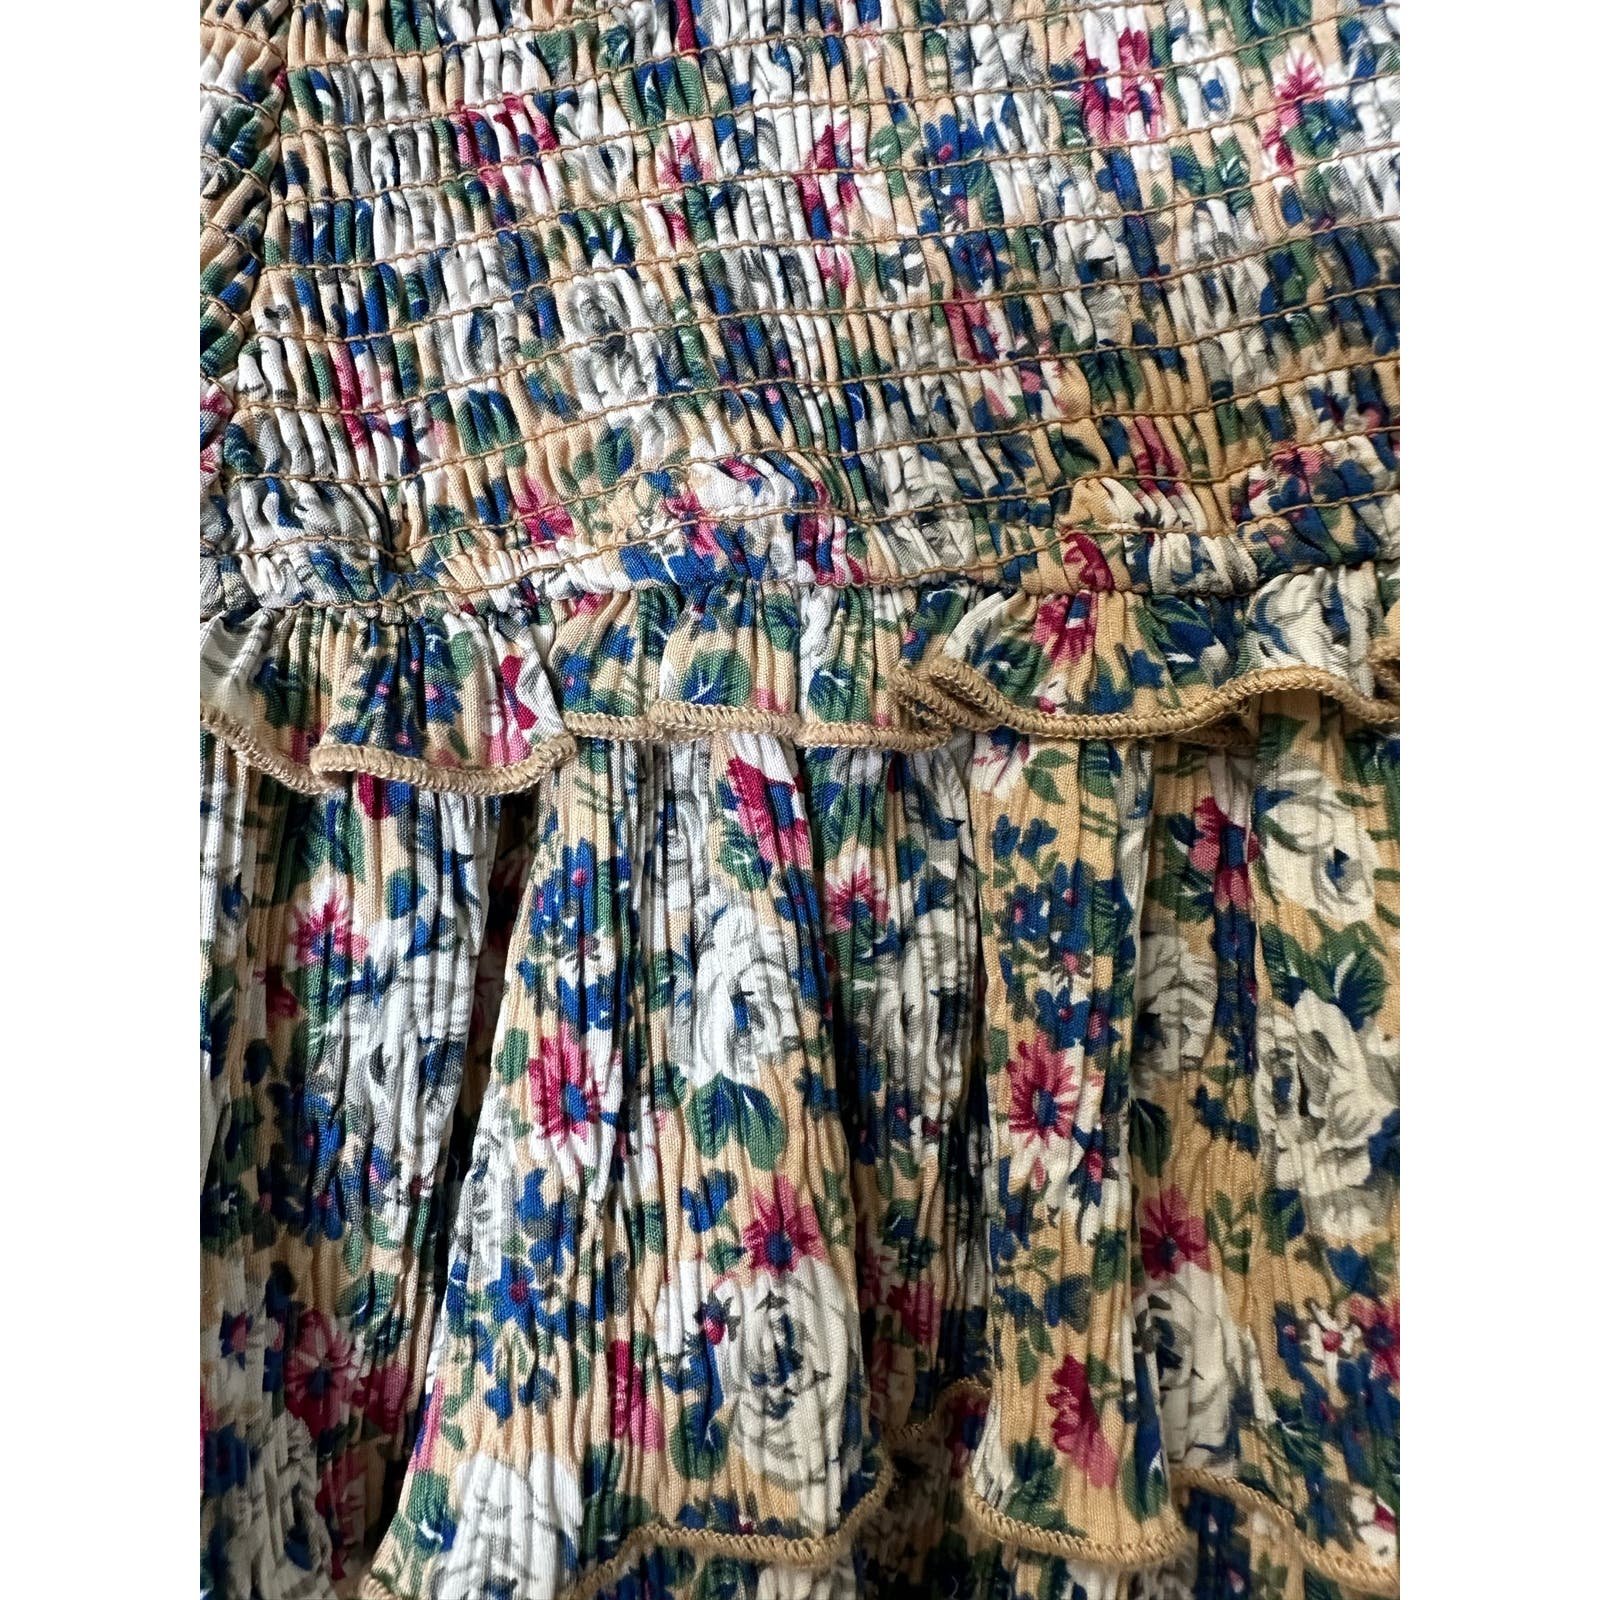 Buy English Factory Blue Green Tan Floral Smocked Waist Ruffle Skirt Sz XS M8N1lK0Ql no tax